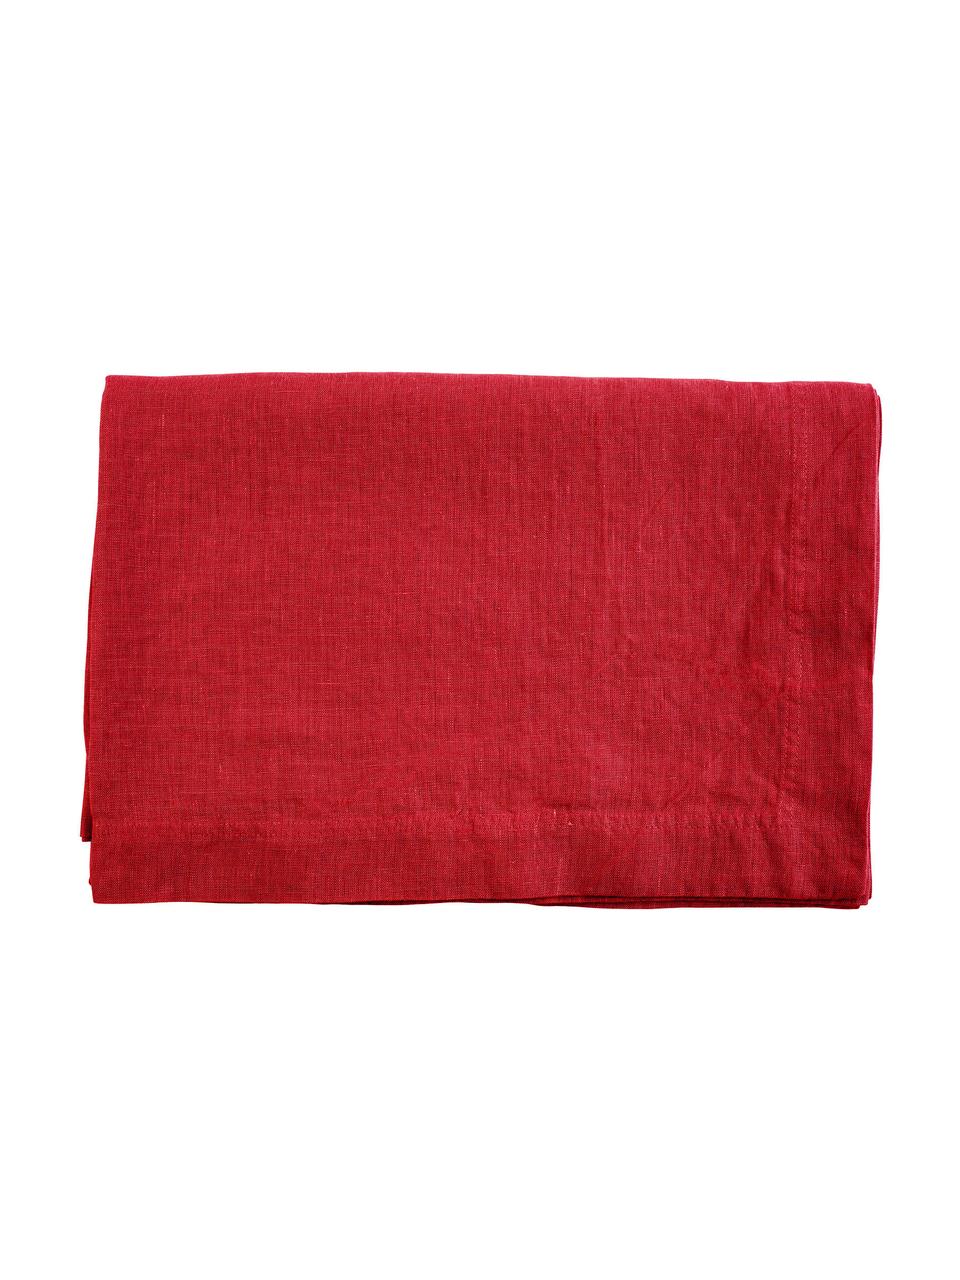 Linnen tafelkleed Basic in rood, Linnen, Rood, Voor 4 - 6 personen (B 170 x L 170 cm)